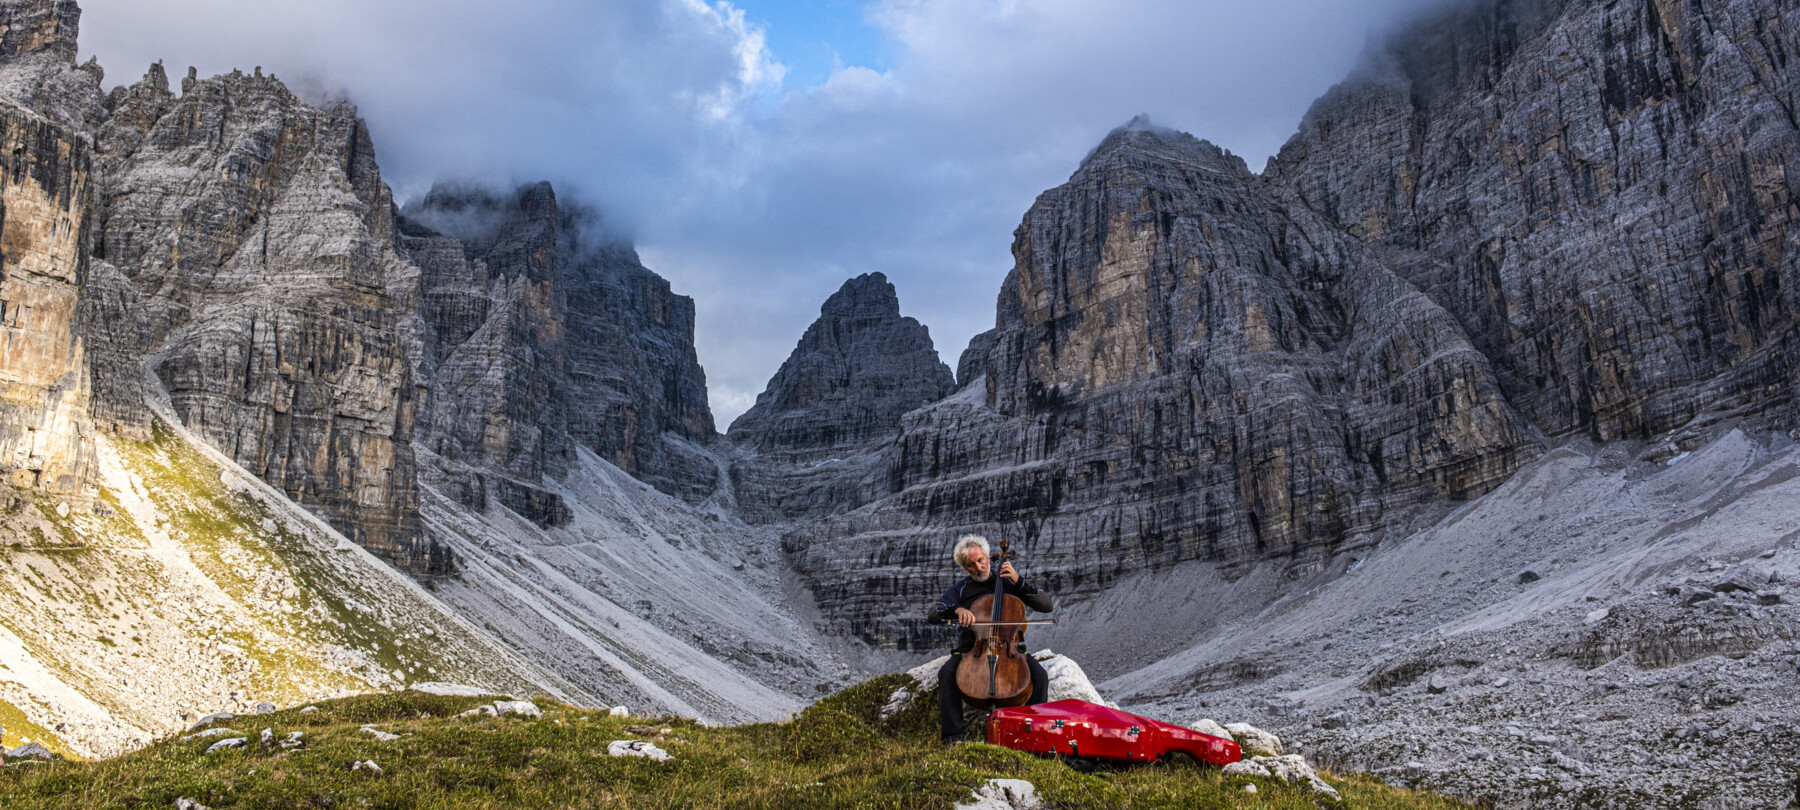 Madonna di Campiglio - Dolomiti di Brenta - Trekking - Mario Brunello | © Pierluigi Orler Dellasega